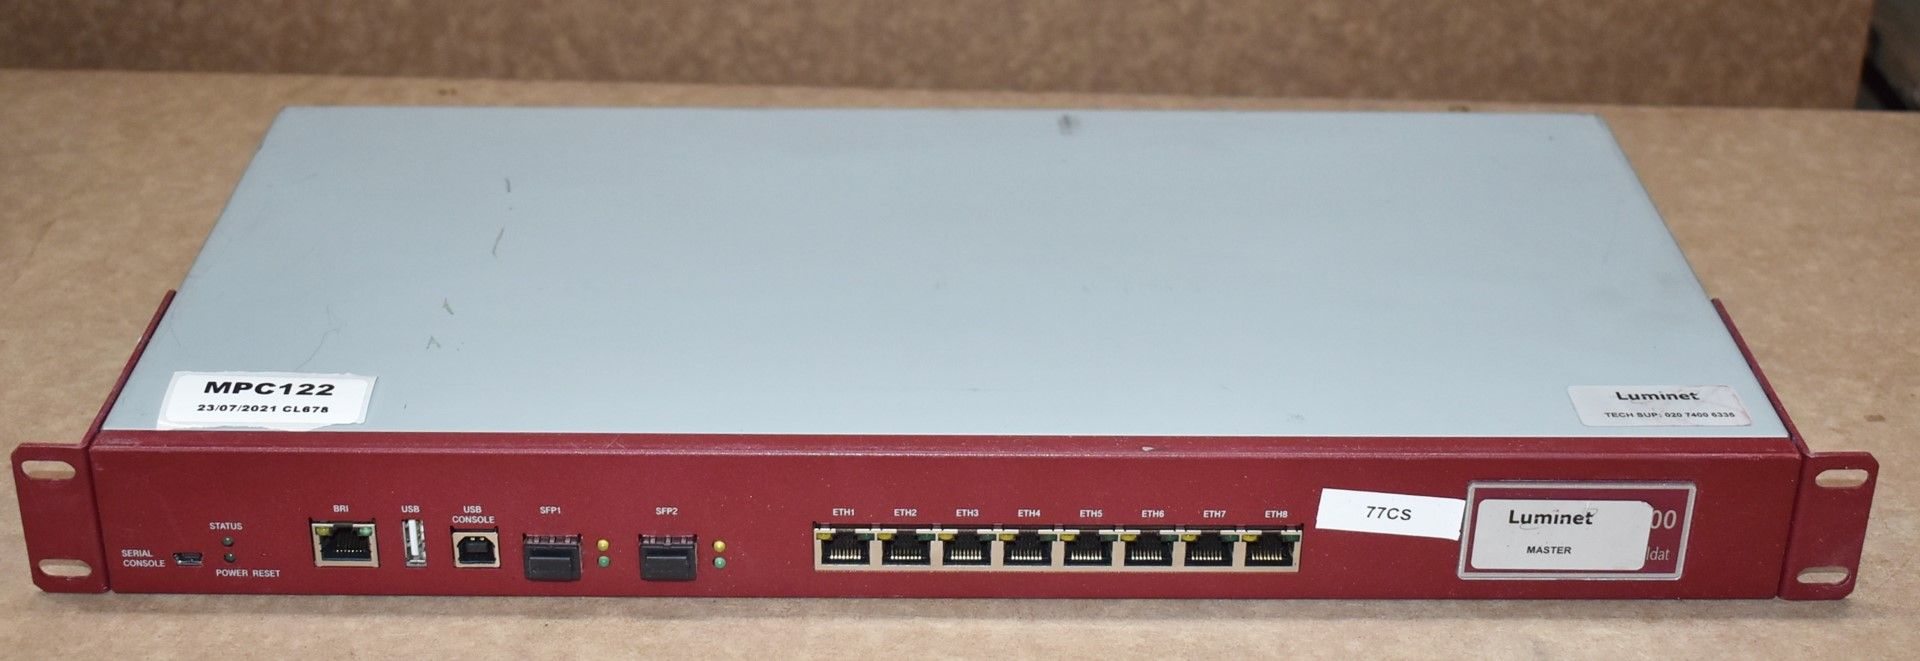 1 x Teldat Bintec RXL12100 Gigabit Ethernet Wireless Router - RRP £1,499 - Includes Power Cable -